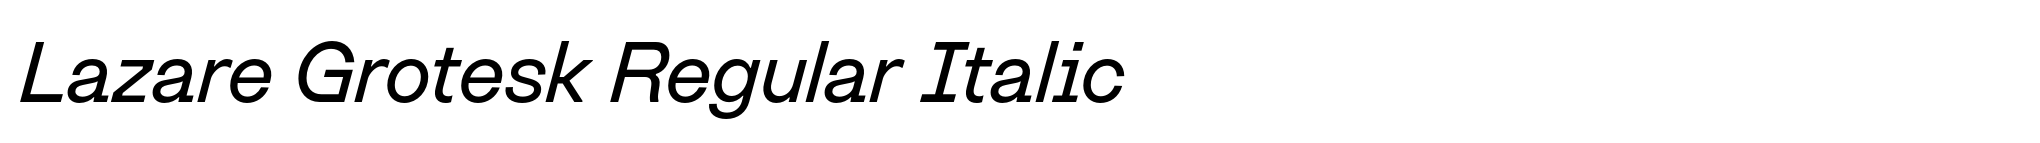 Lazare Grotesk Regular Italic image